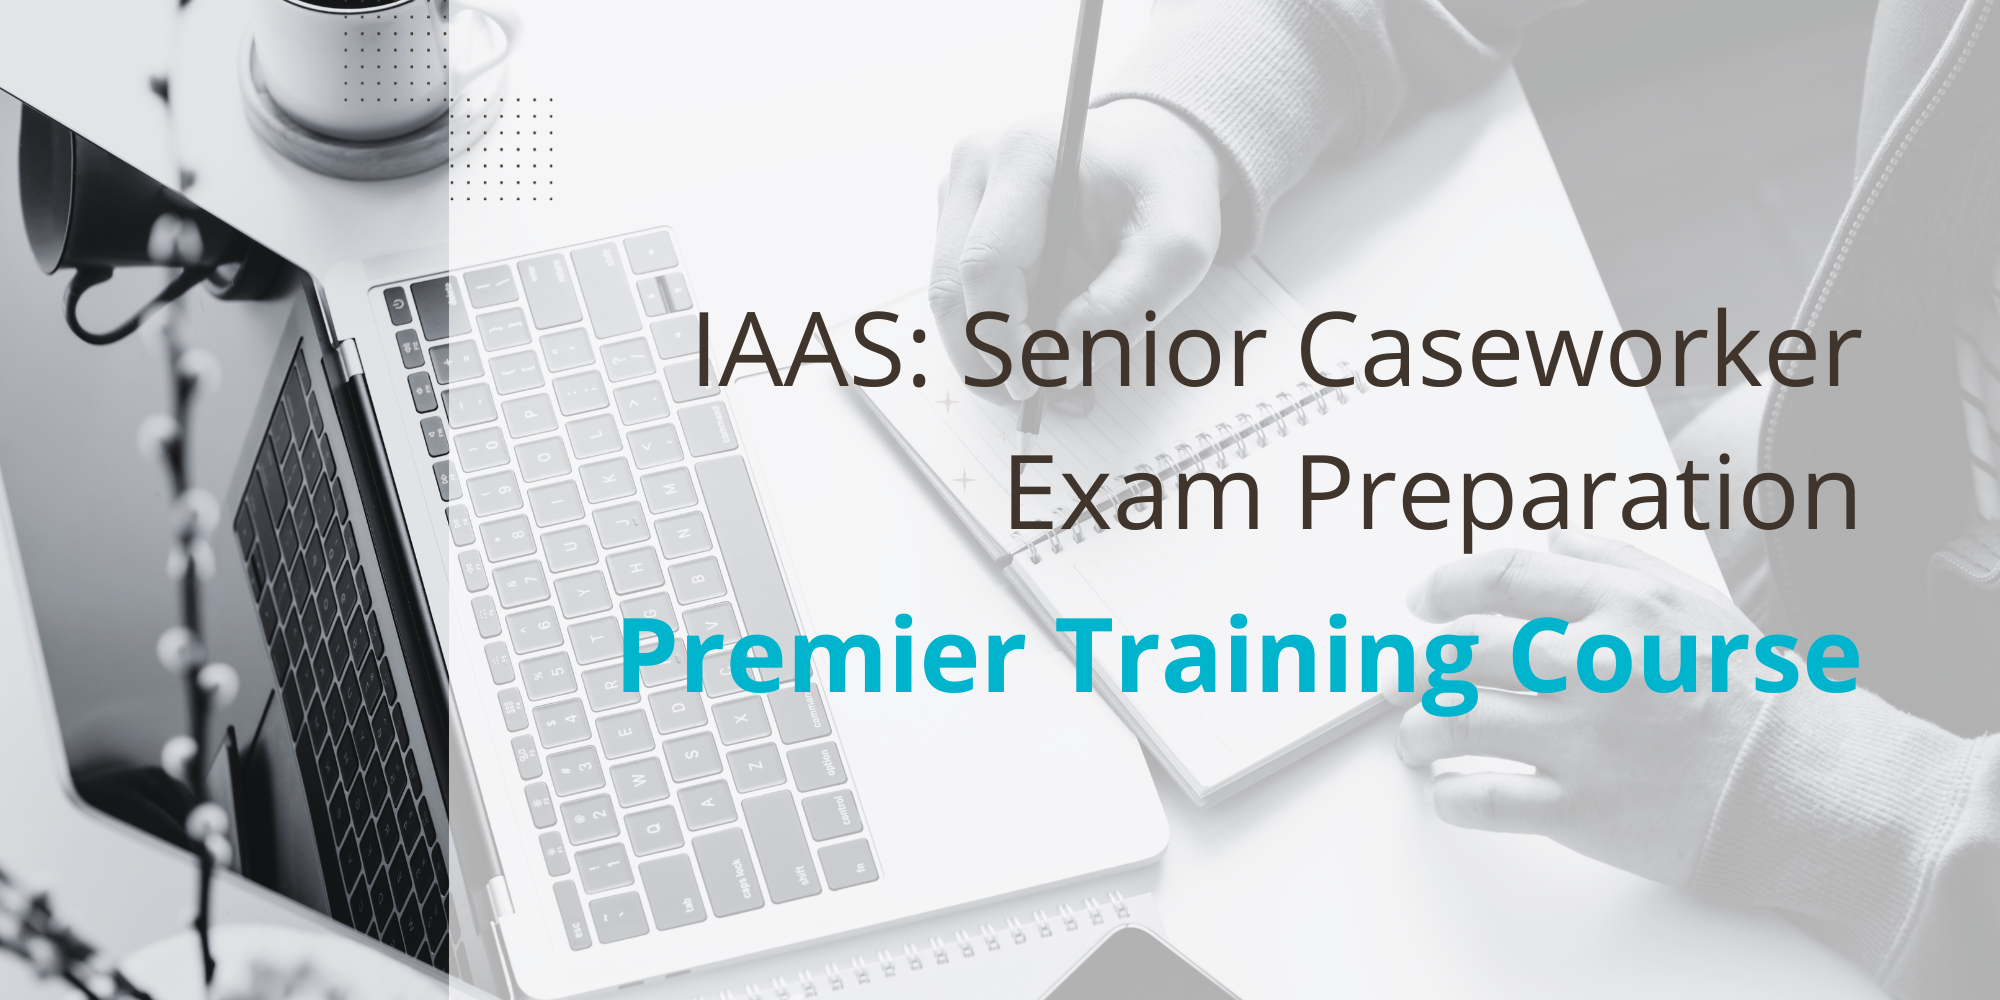 IAAS: Senior Caseworker Exam Preparation Course